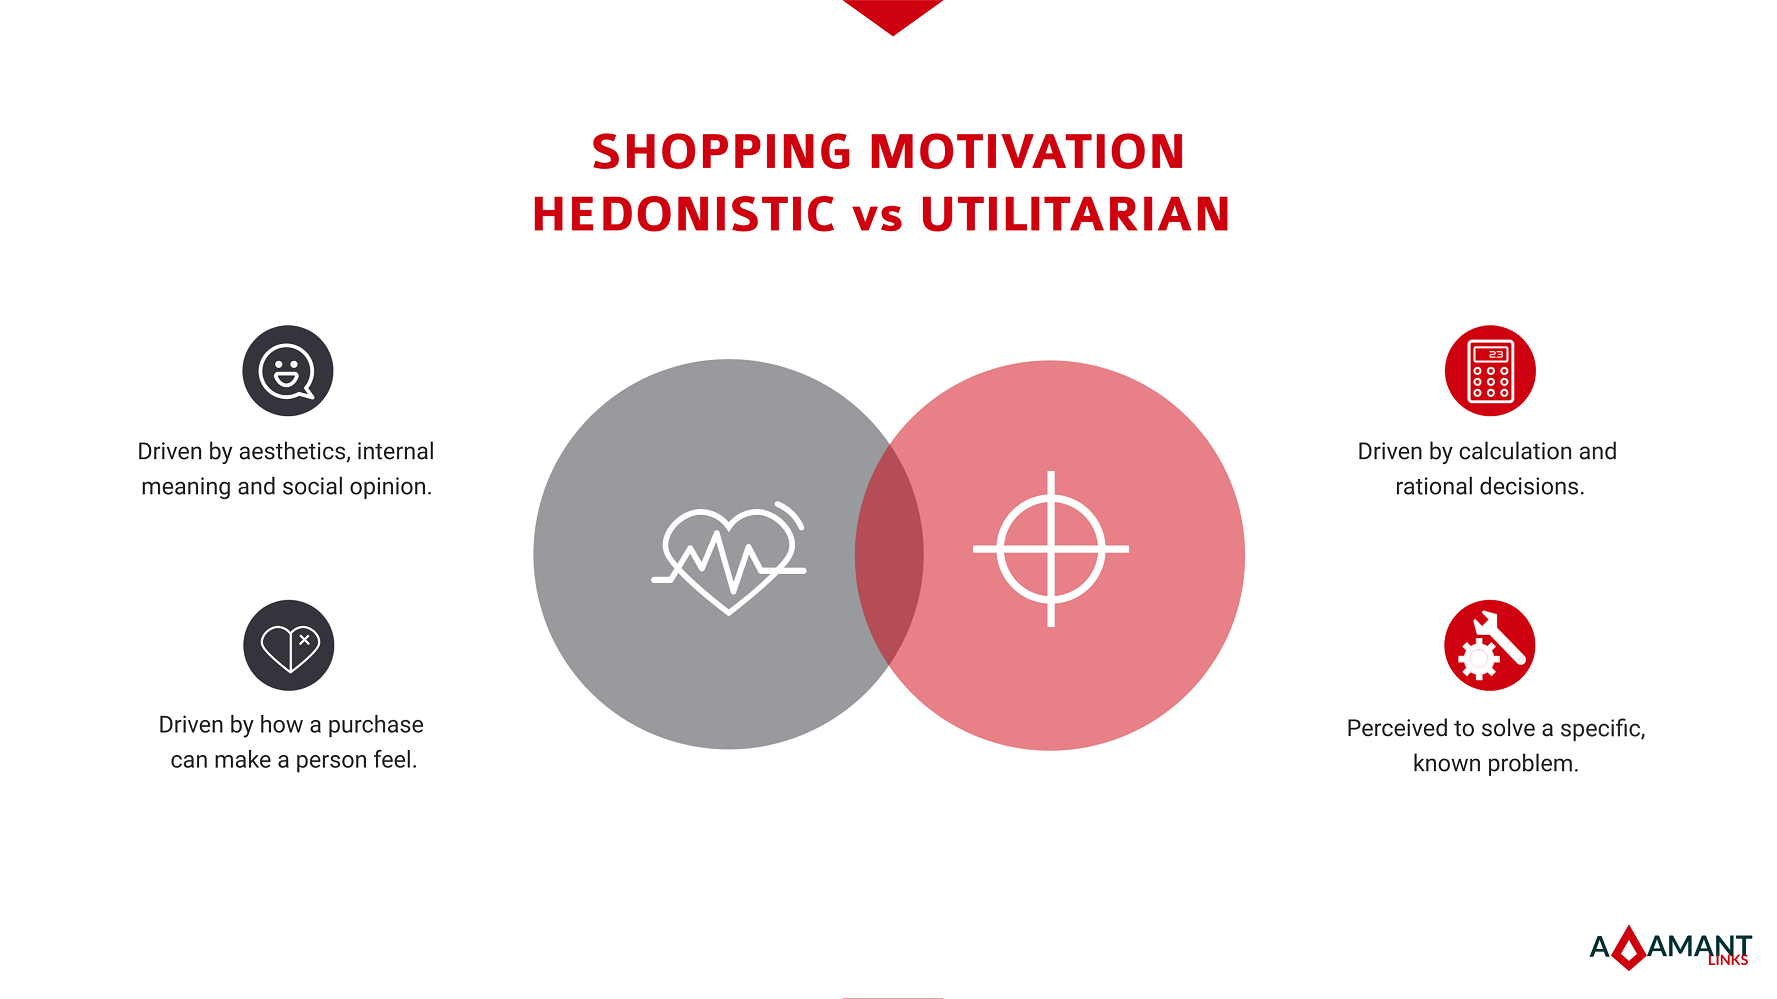 Adamant Links - Hedonistic vs Utilitarian Shopping Motivation